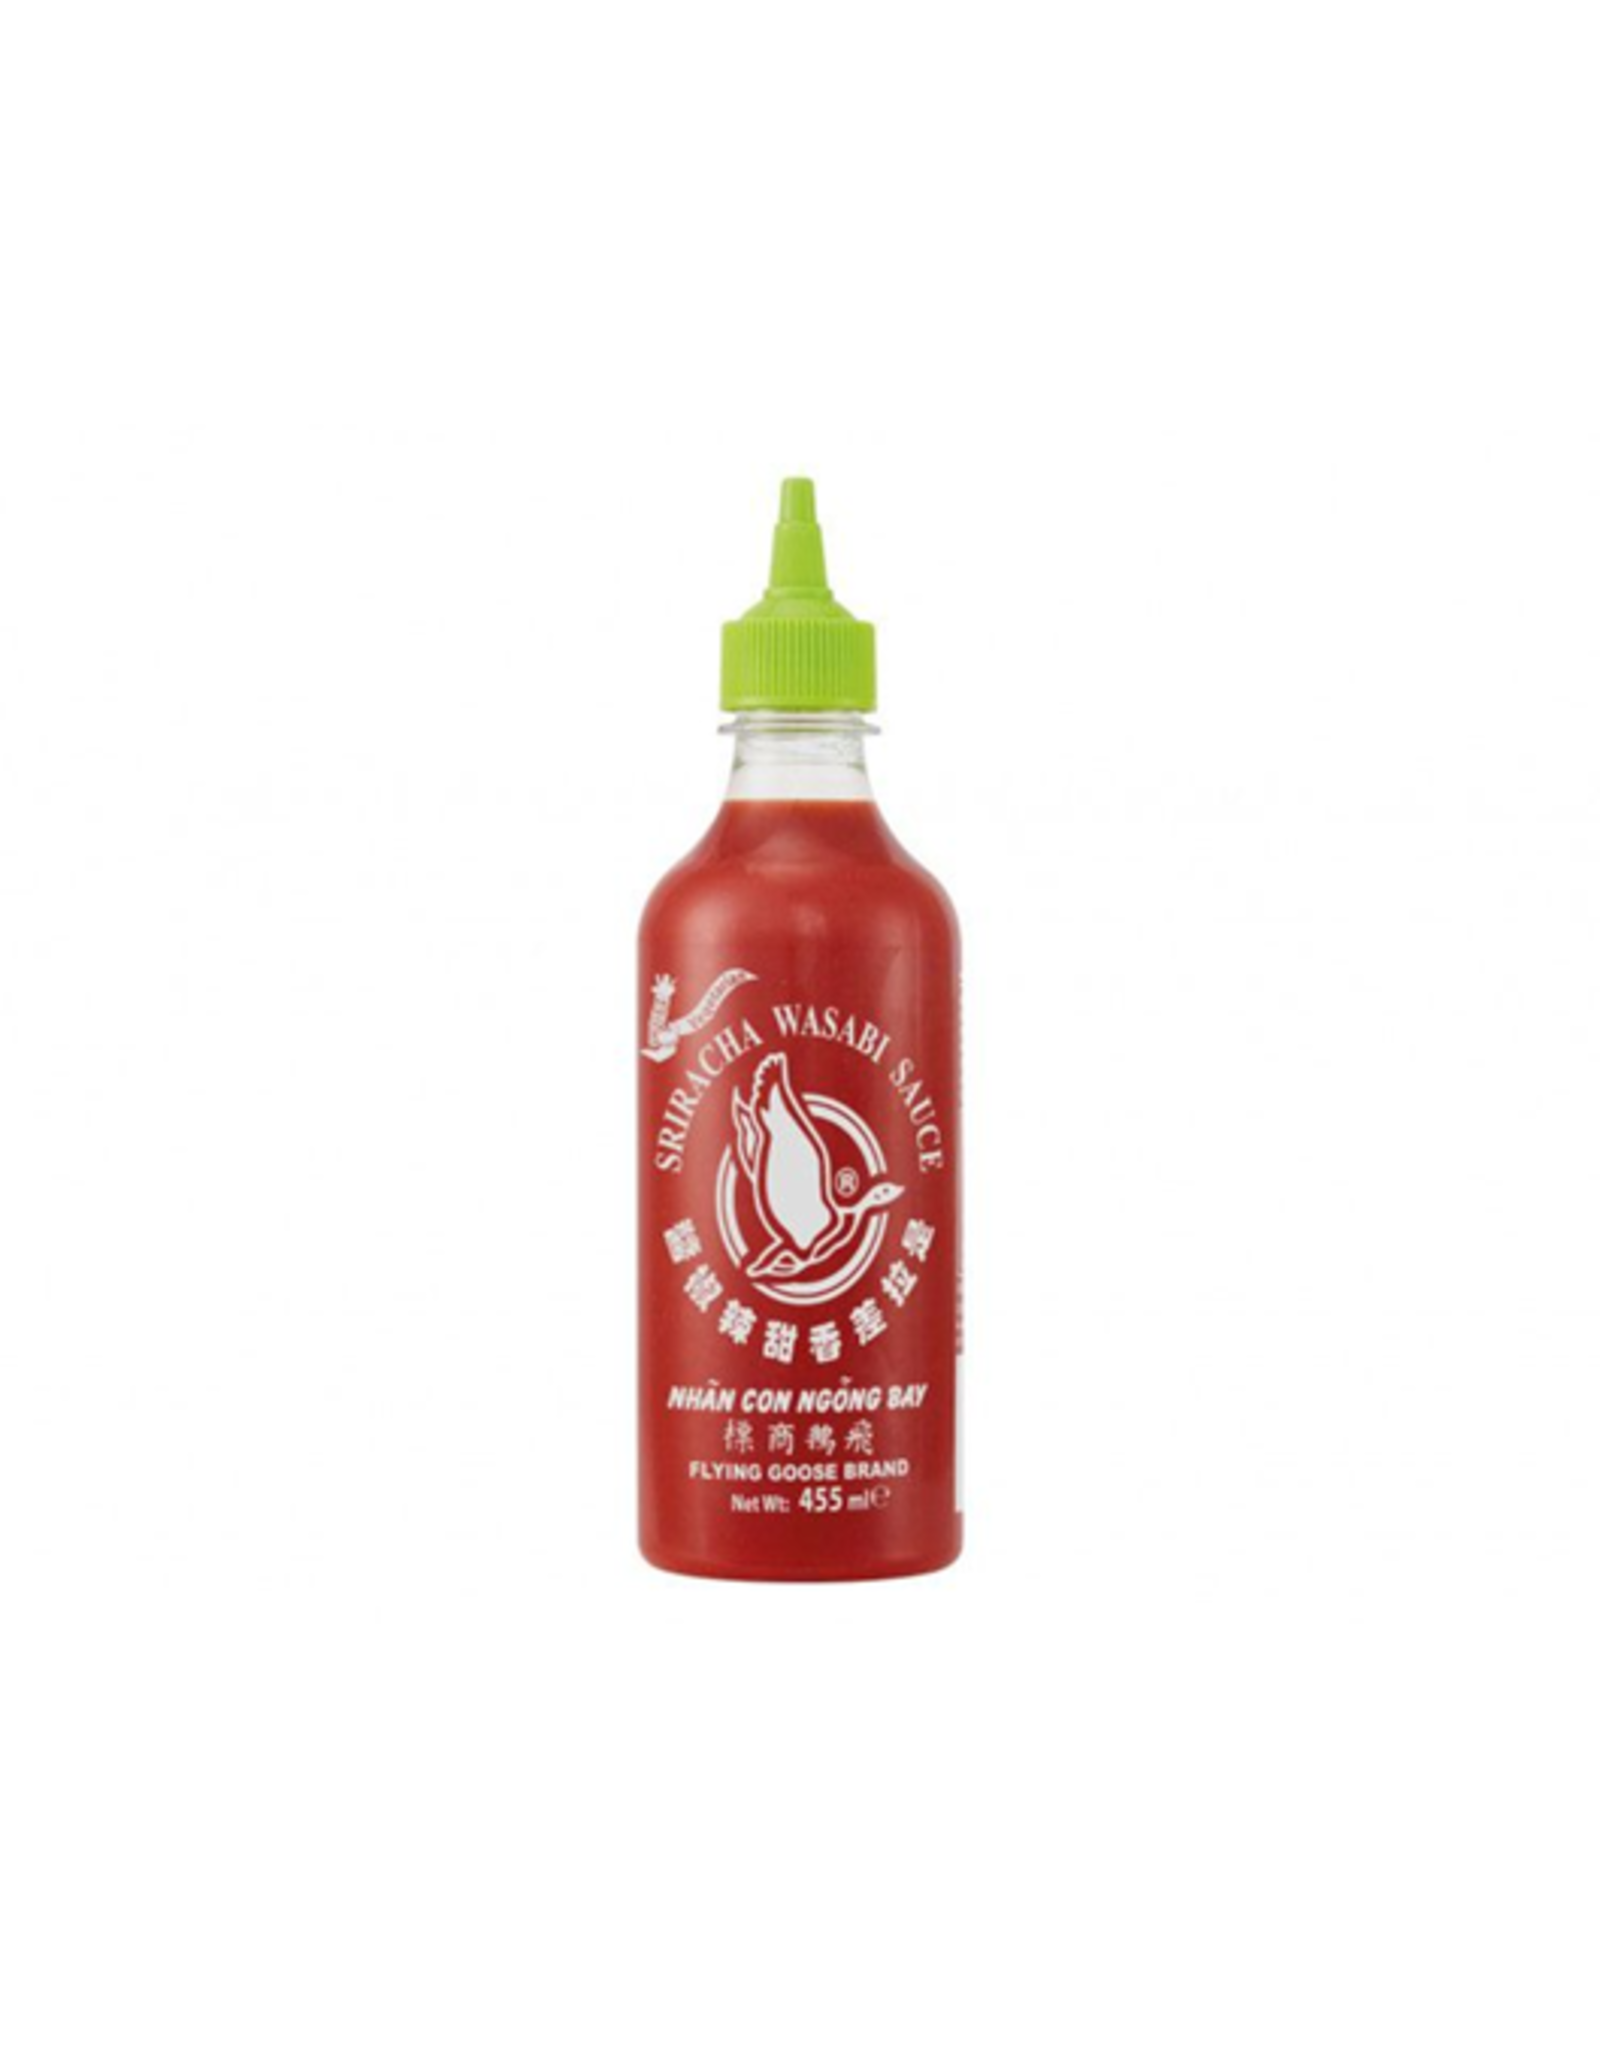 Flying Goose Brand Sriracha Wasabi sauce